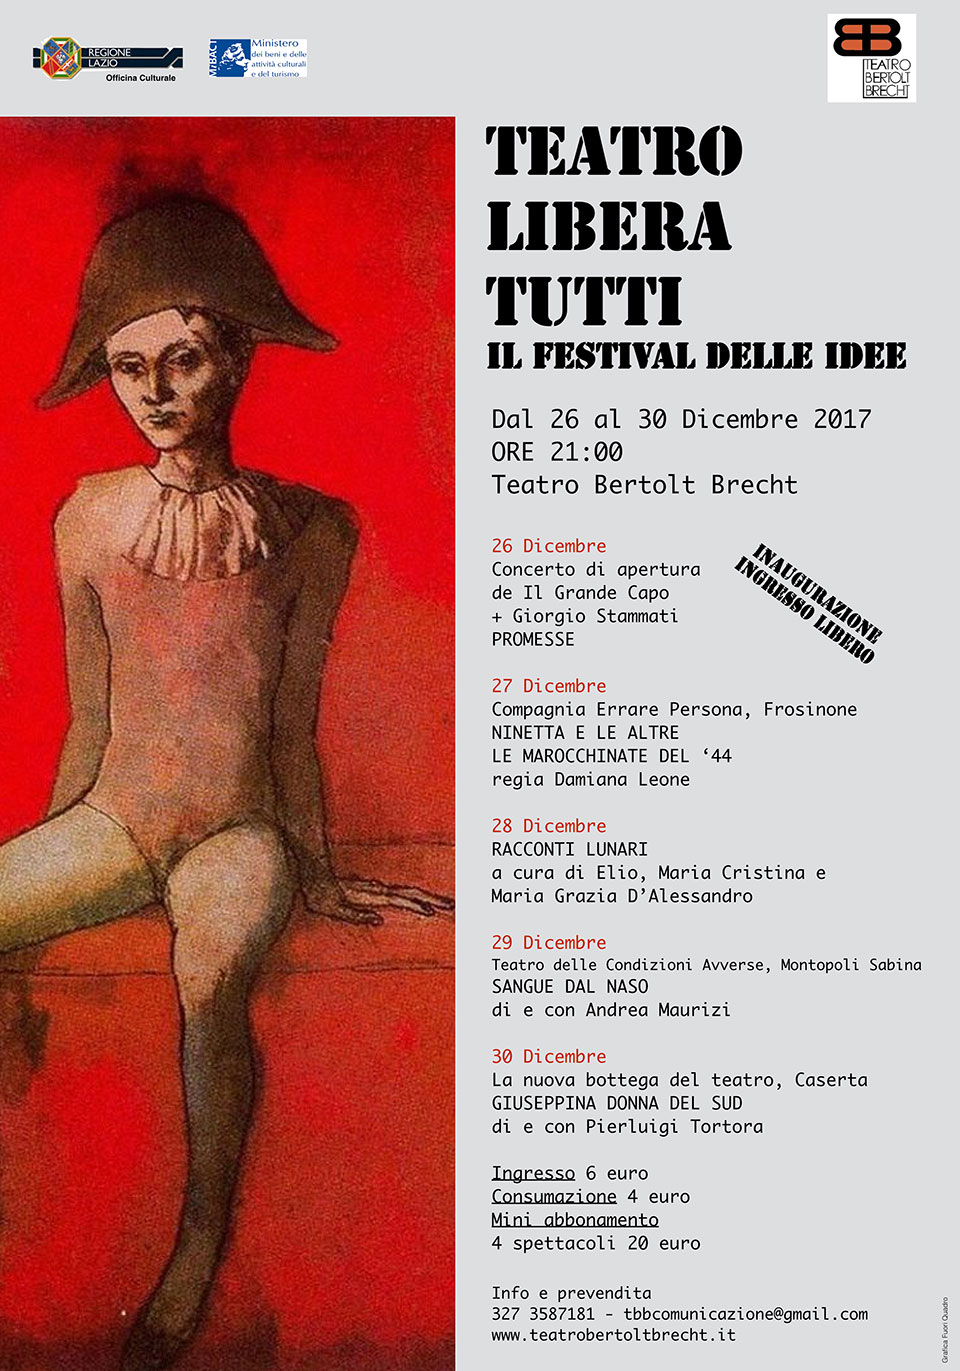 Teatro Libera Tutti 2017/18